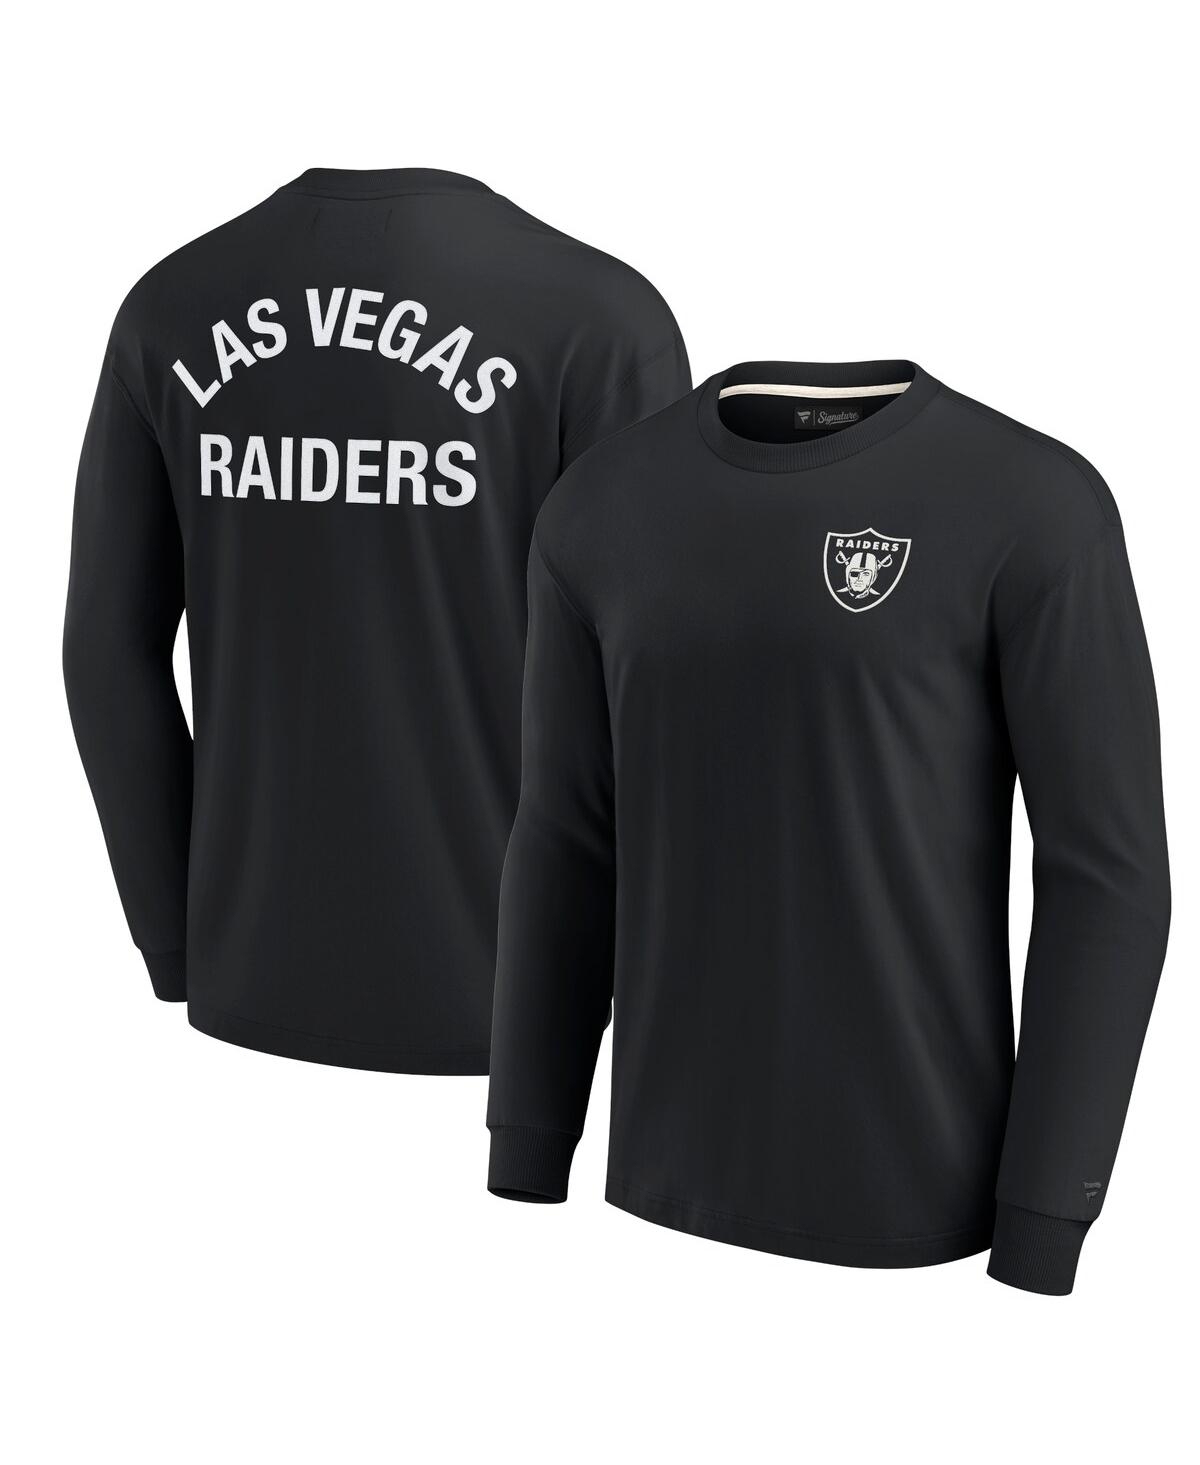 Fanatics Signature Men's And Women's  Black Las Vegas Raiders Super Soft Long Sleeve T-shirt